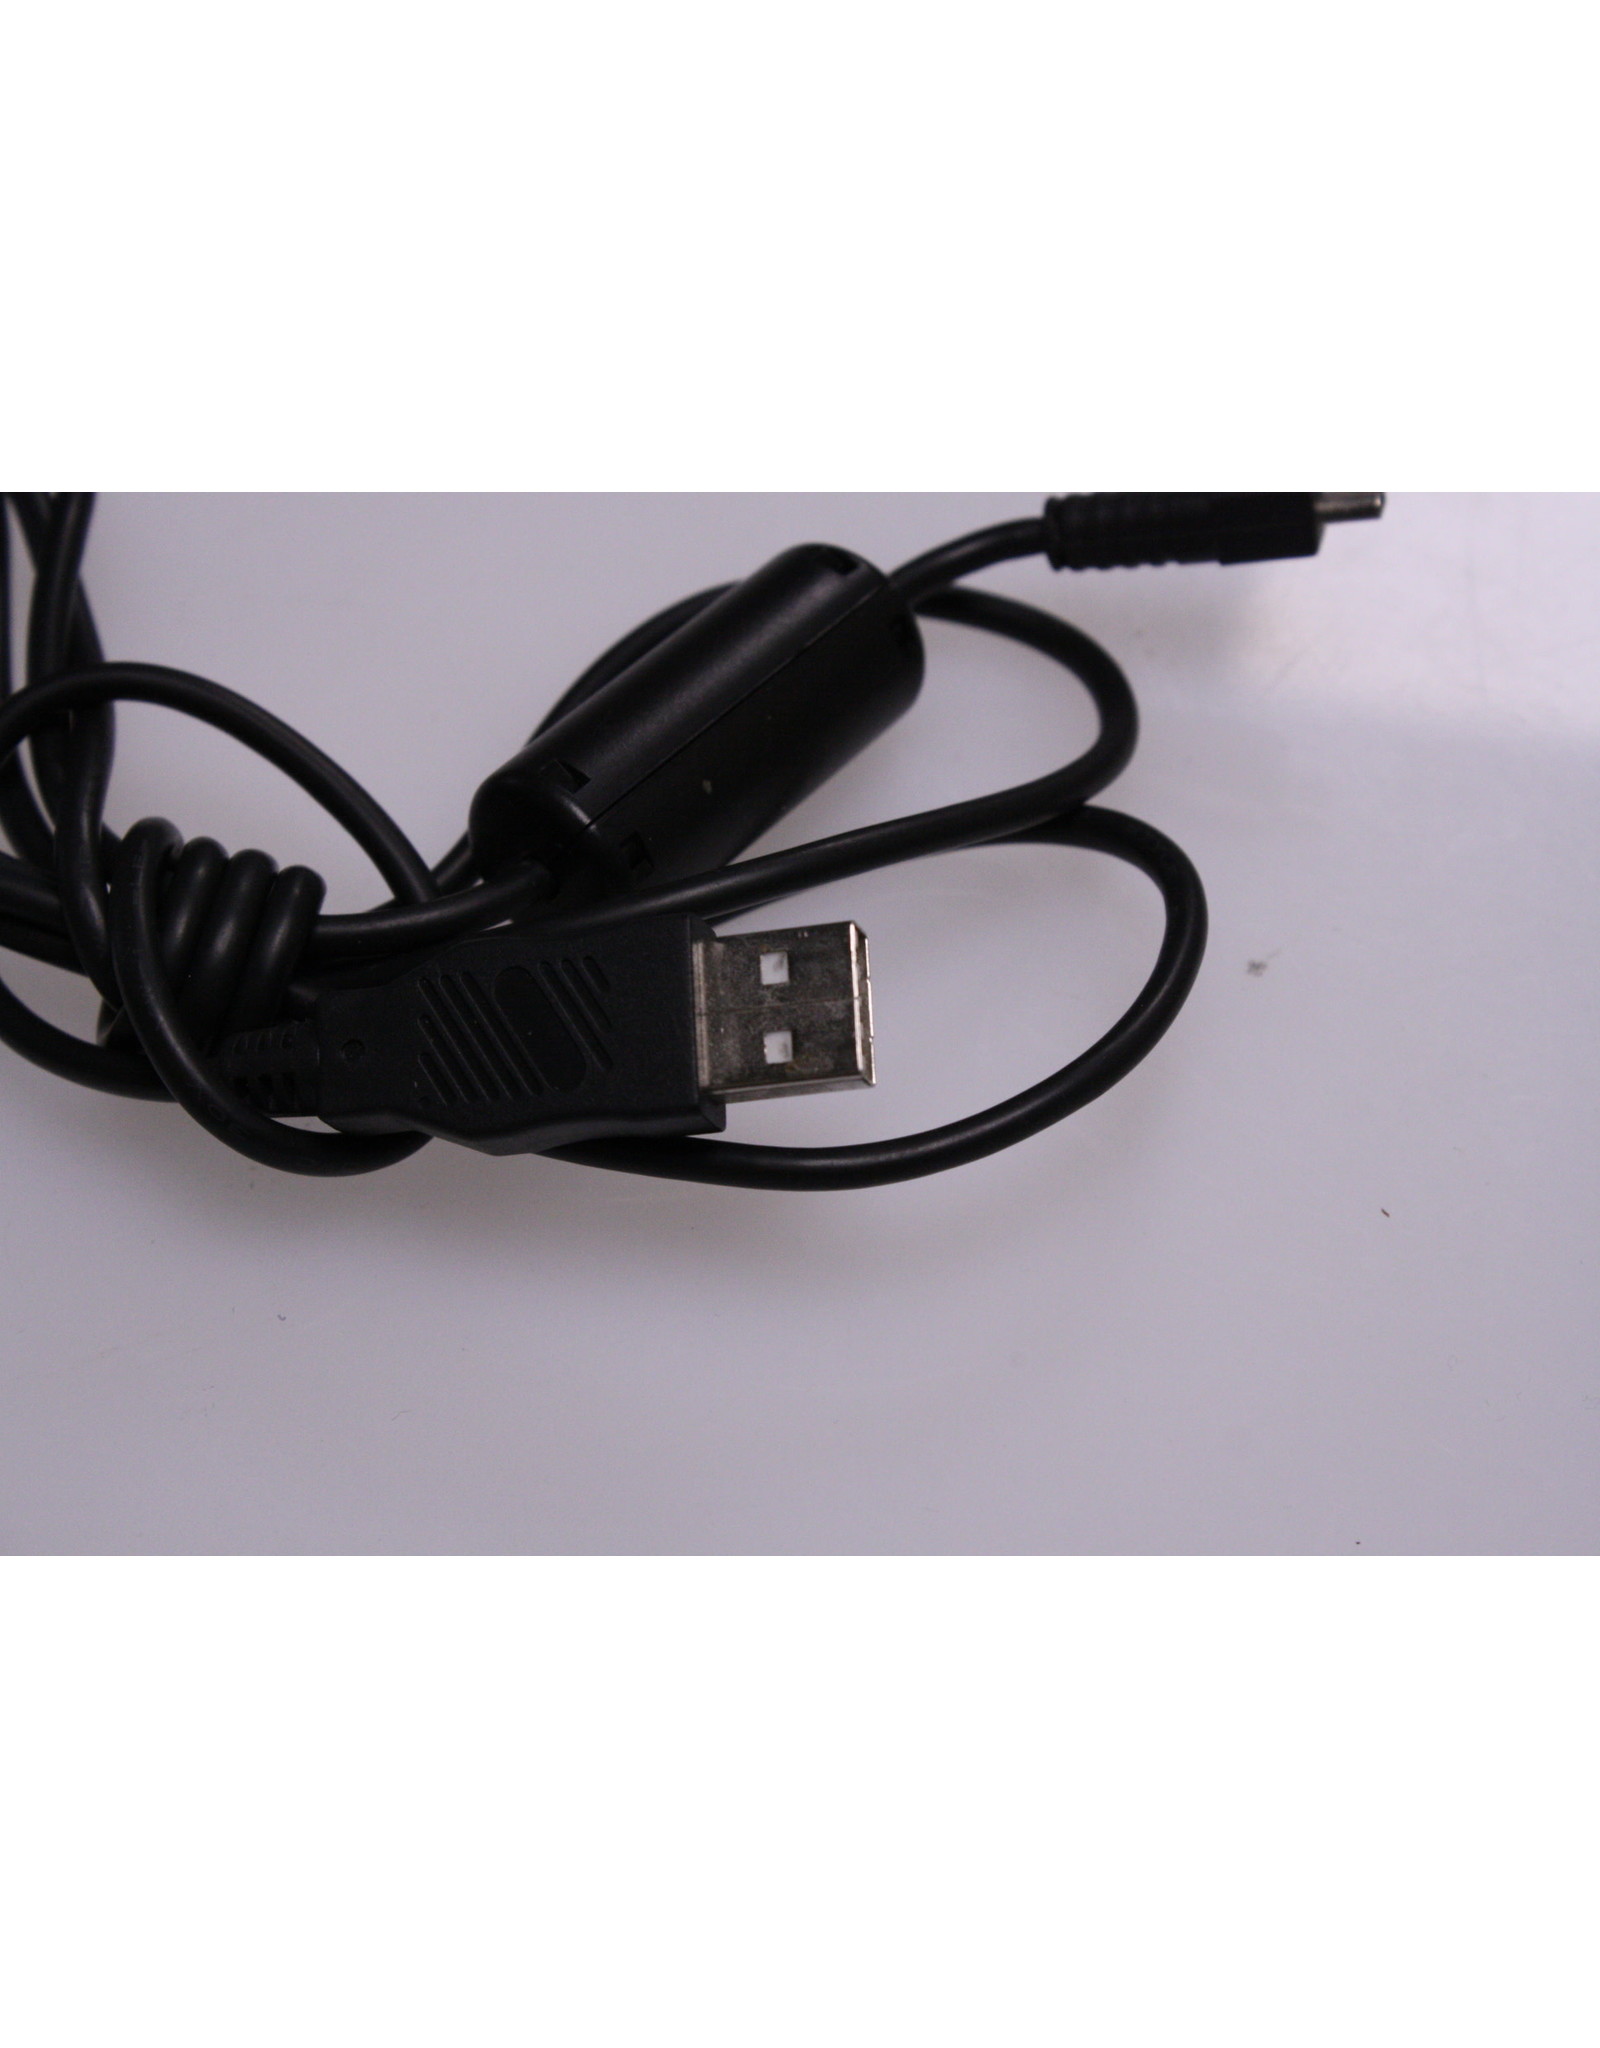 Camera USB Cable  Sony handycam digital